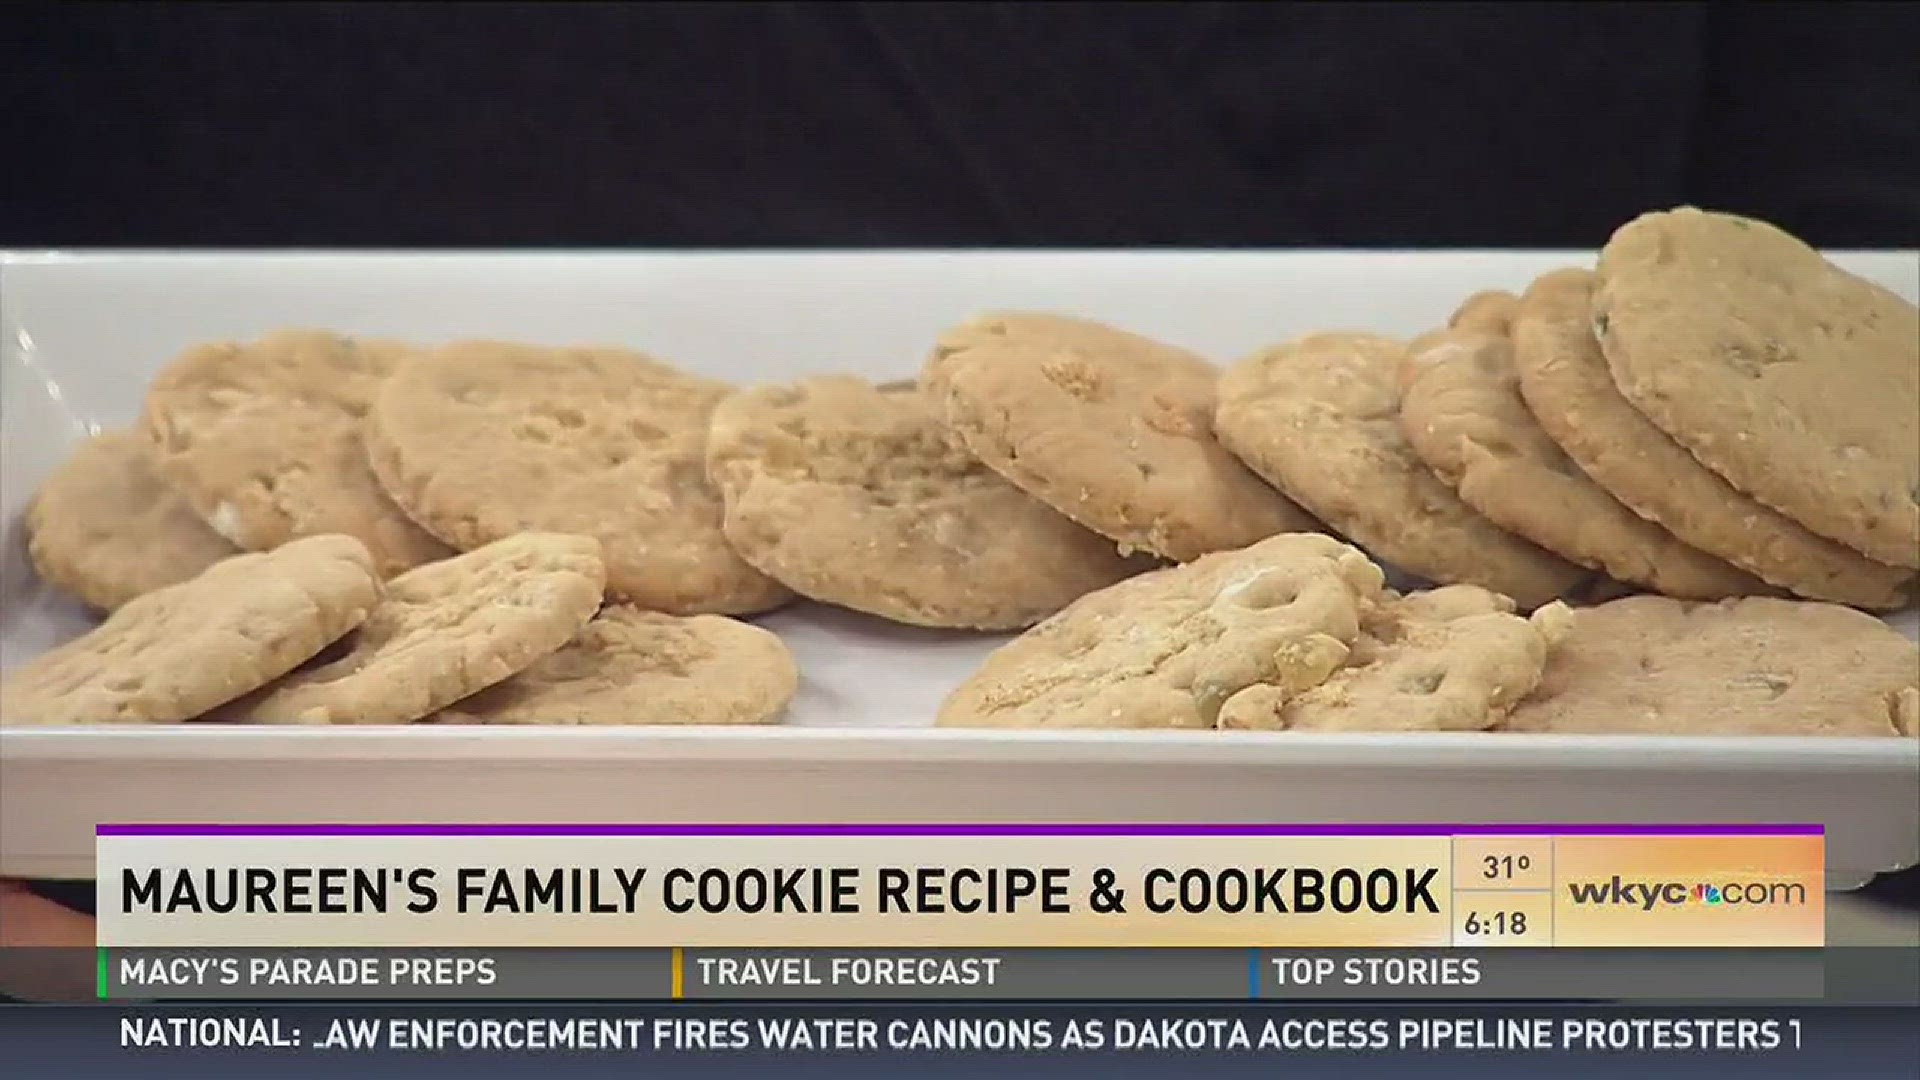 Maureen's Family Cookie Recipe & Cookbook